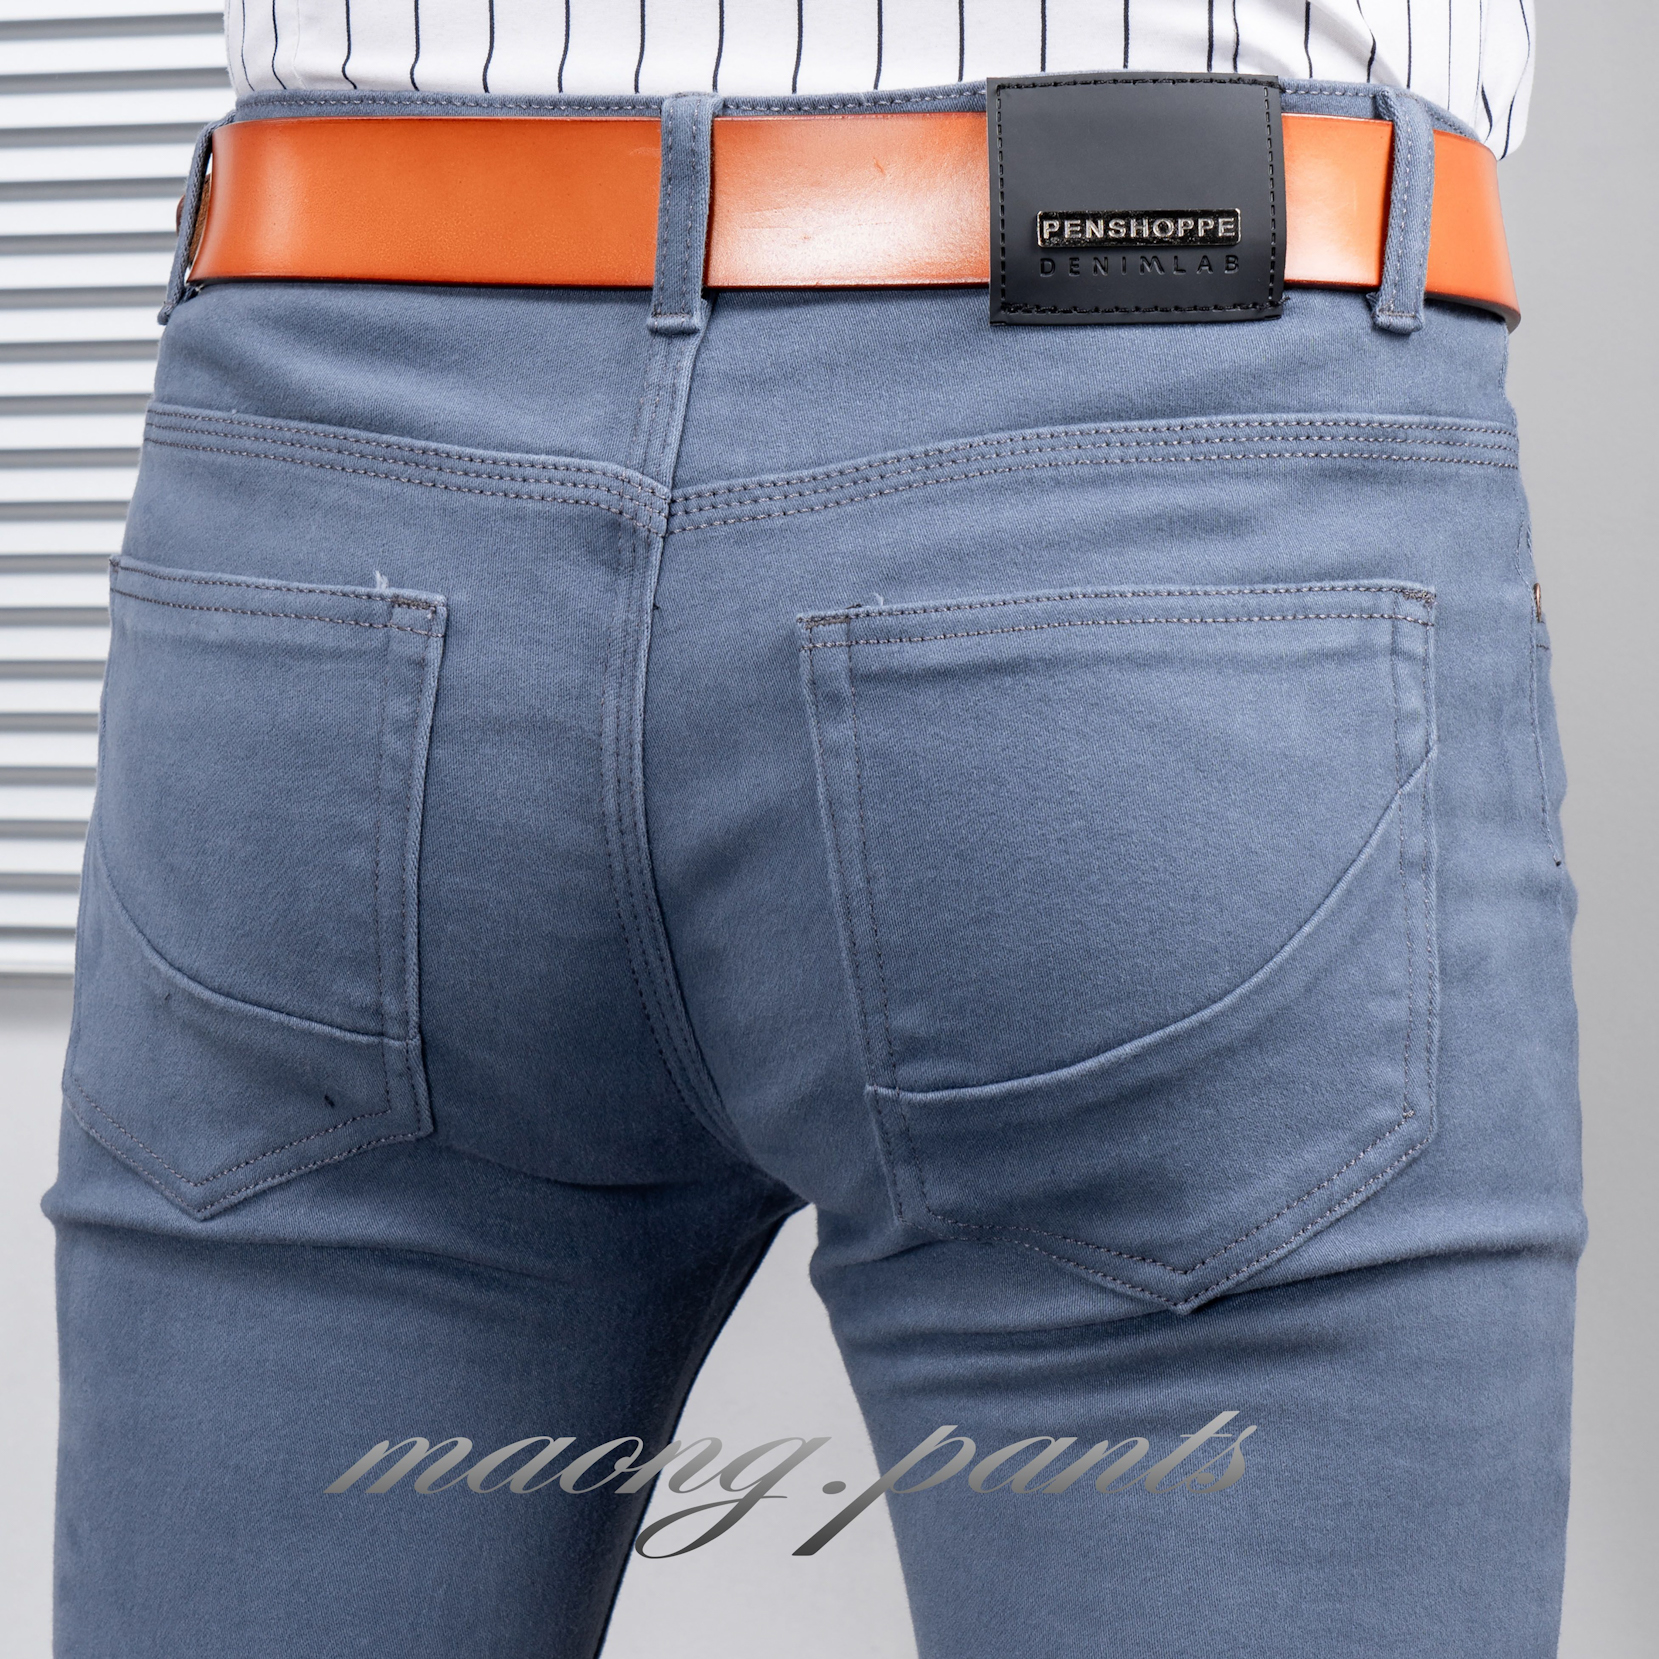 Light Blue/ Denim stretchable Jeans Pants For Men COD